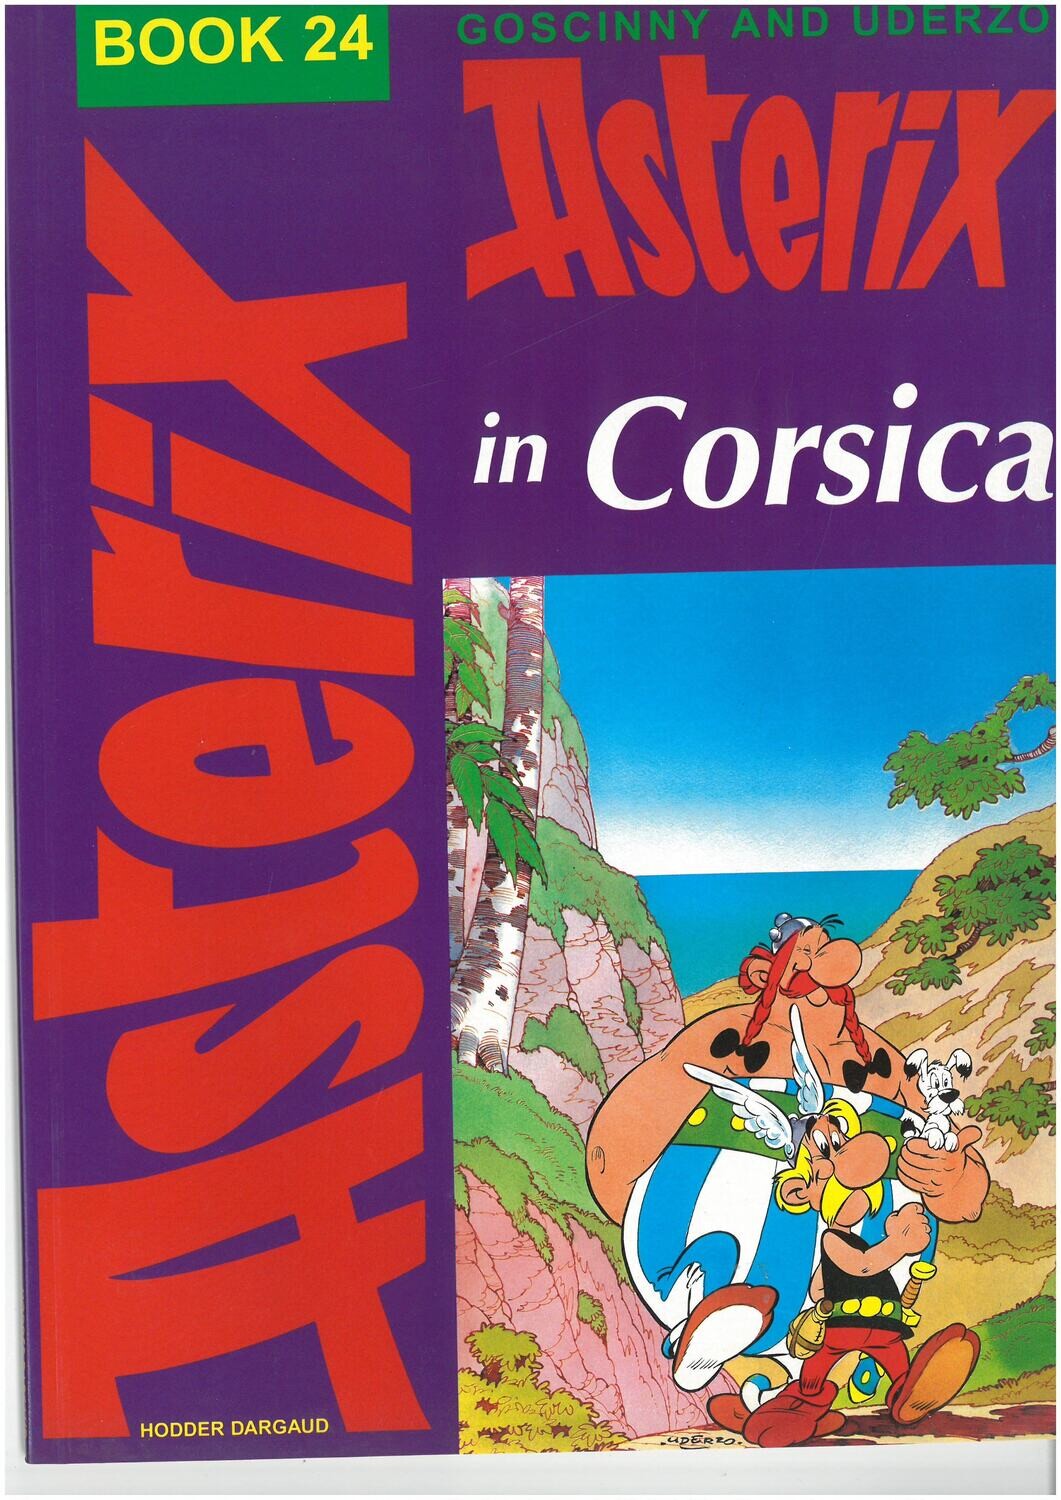 Asterix book : 24. Asterix in Corsica